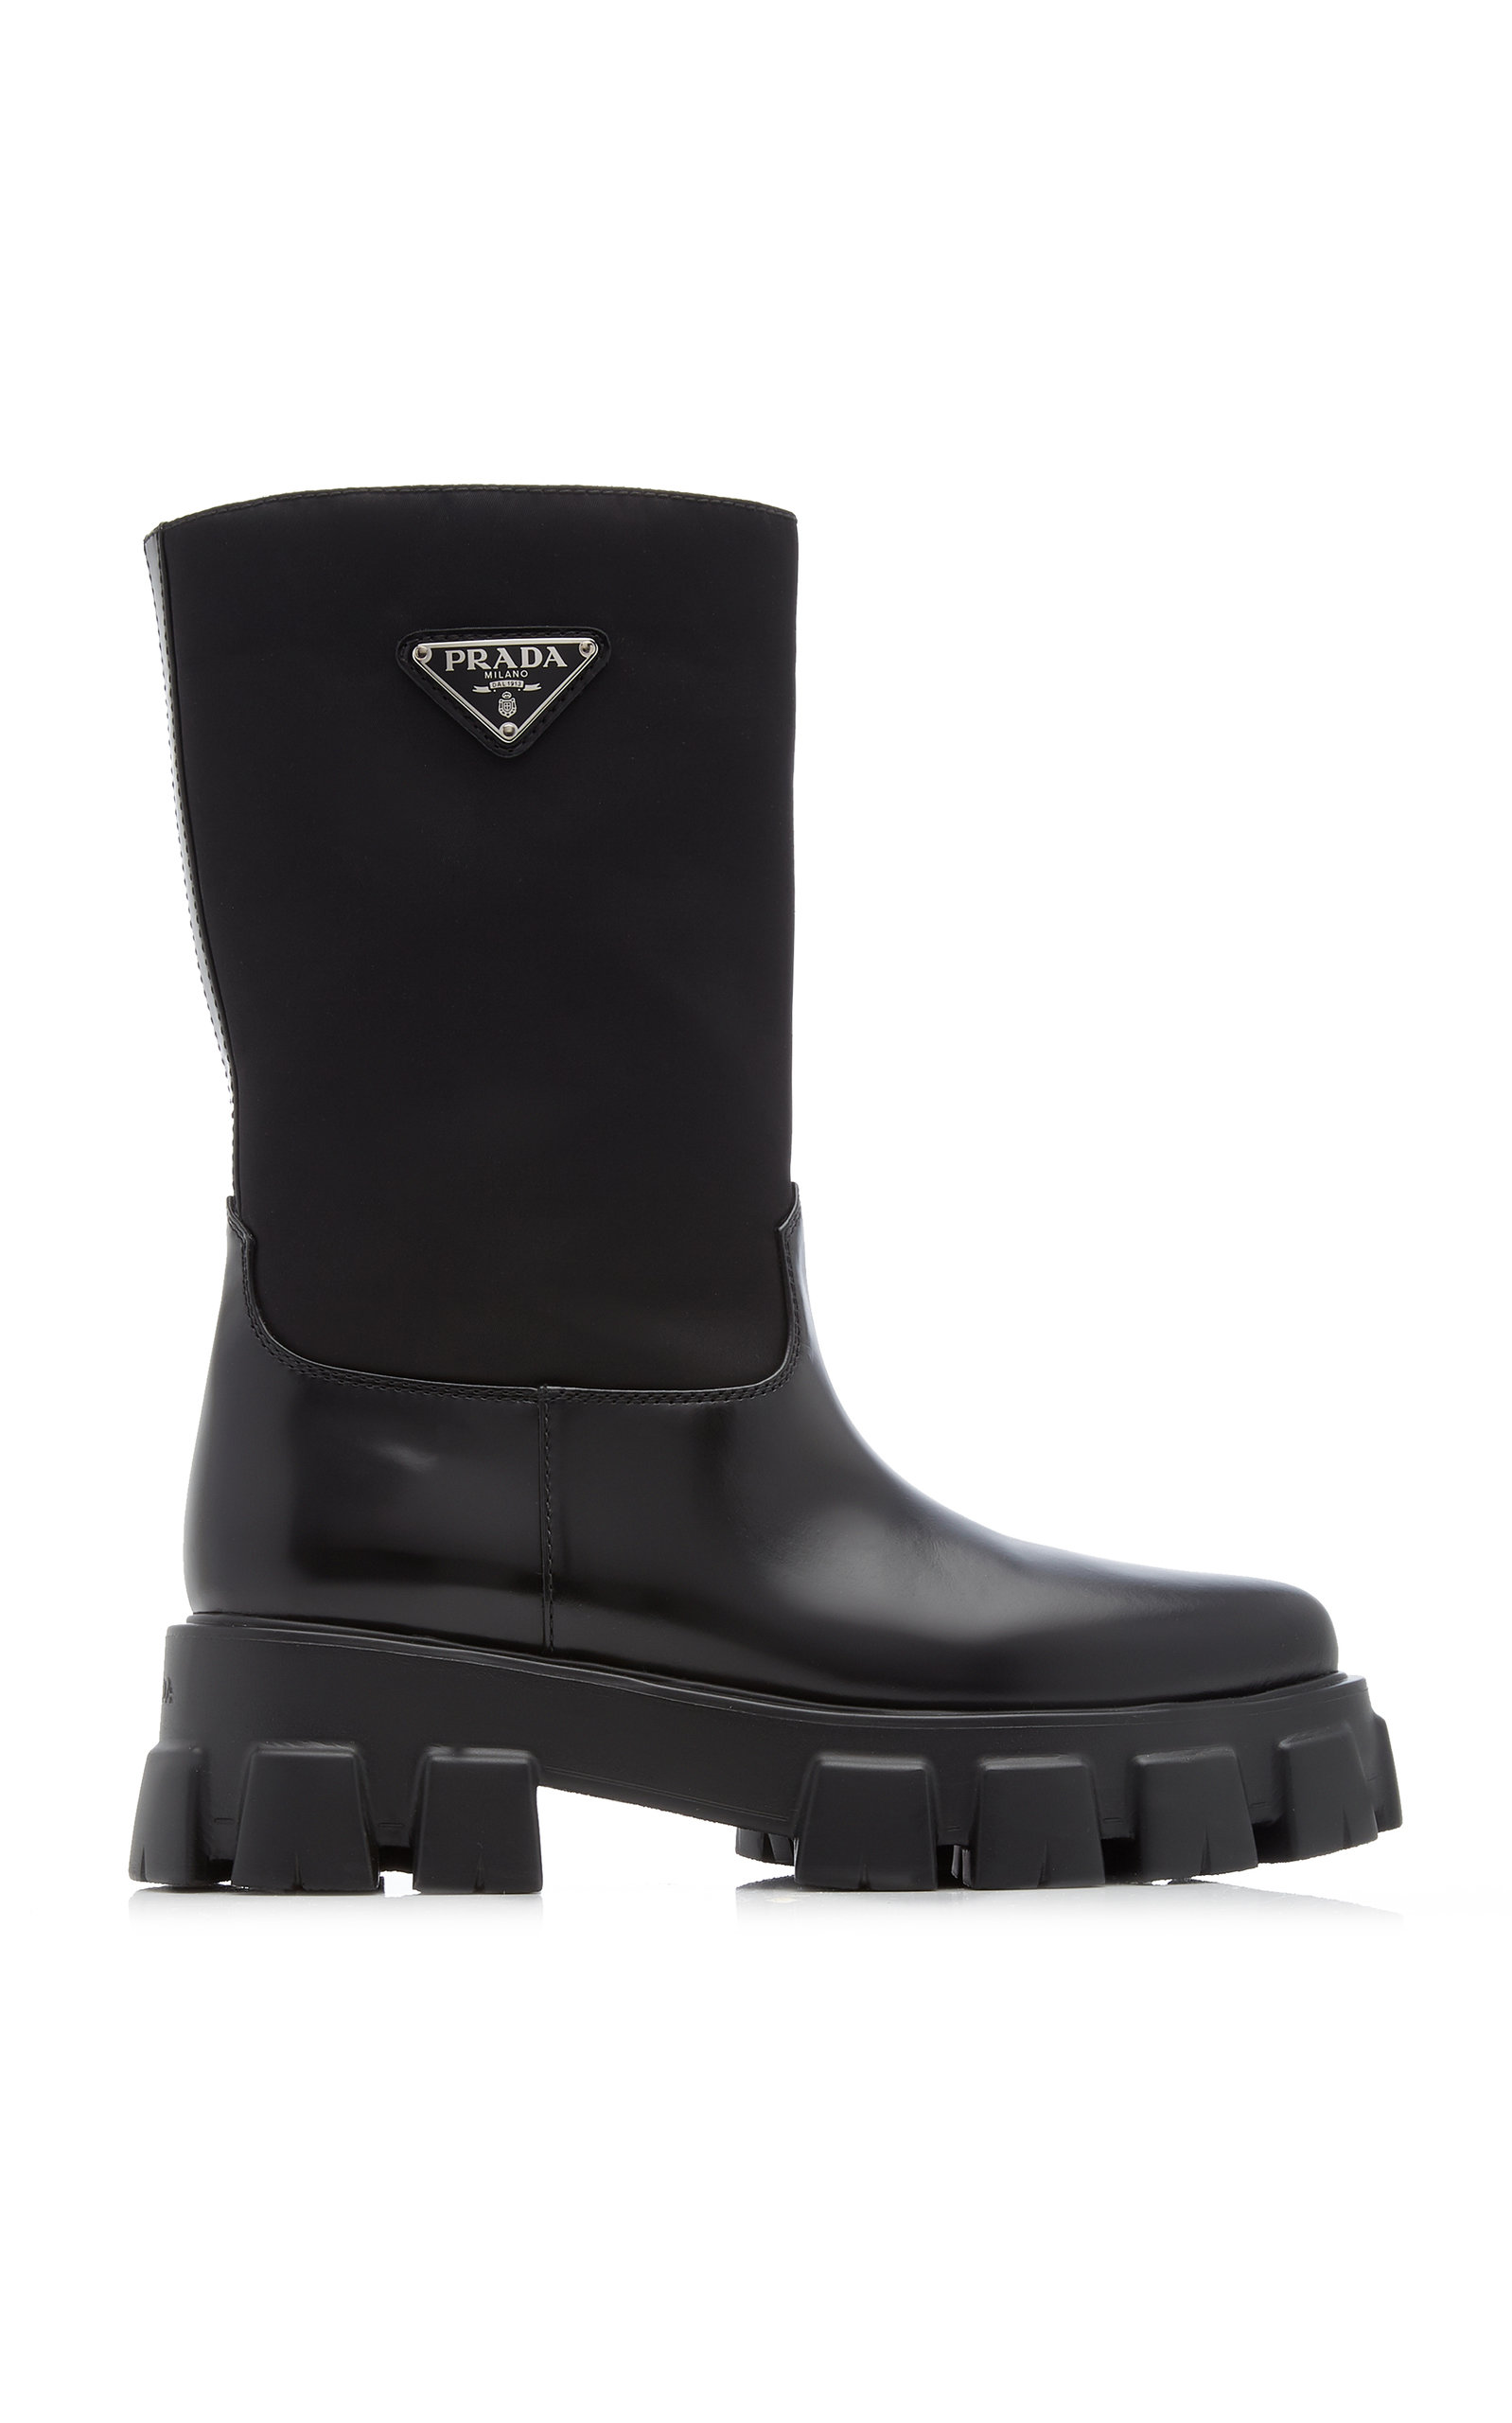 Prada - Women's Leather Boots - Black - Moda Operandi